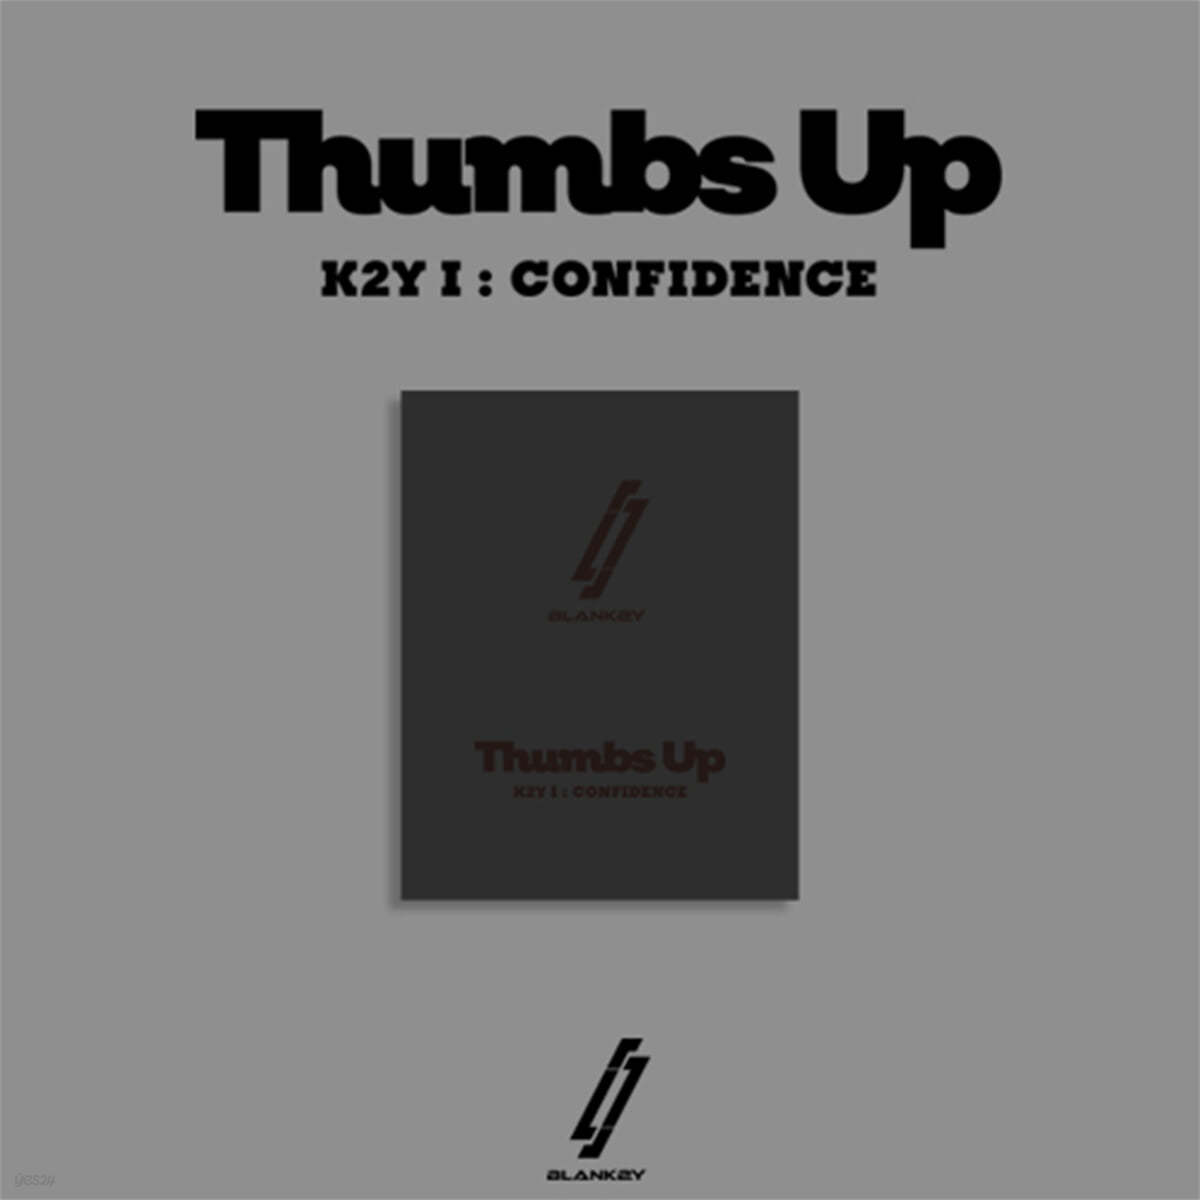 BLANK2Y (블랭키) - 미니앨범 1집 : K2Y I : CONFIDENCE [Thumbs Up][버전 2종 중 1종 랜덤 발송]